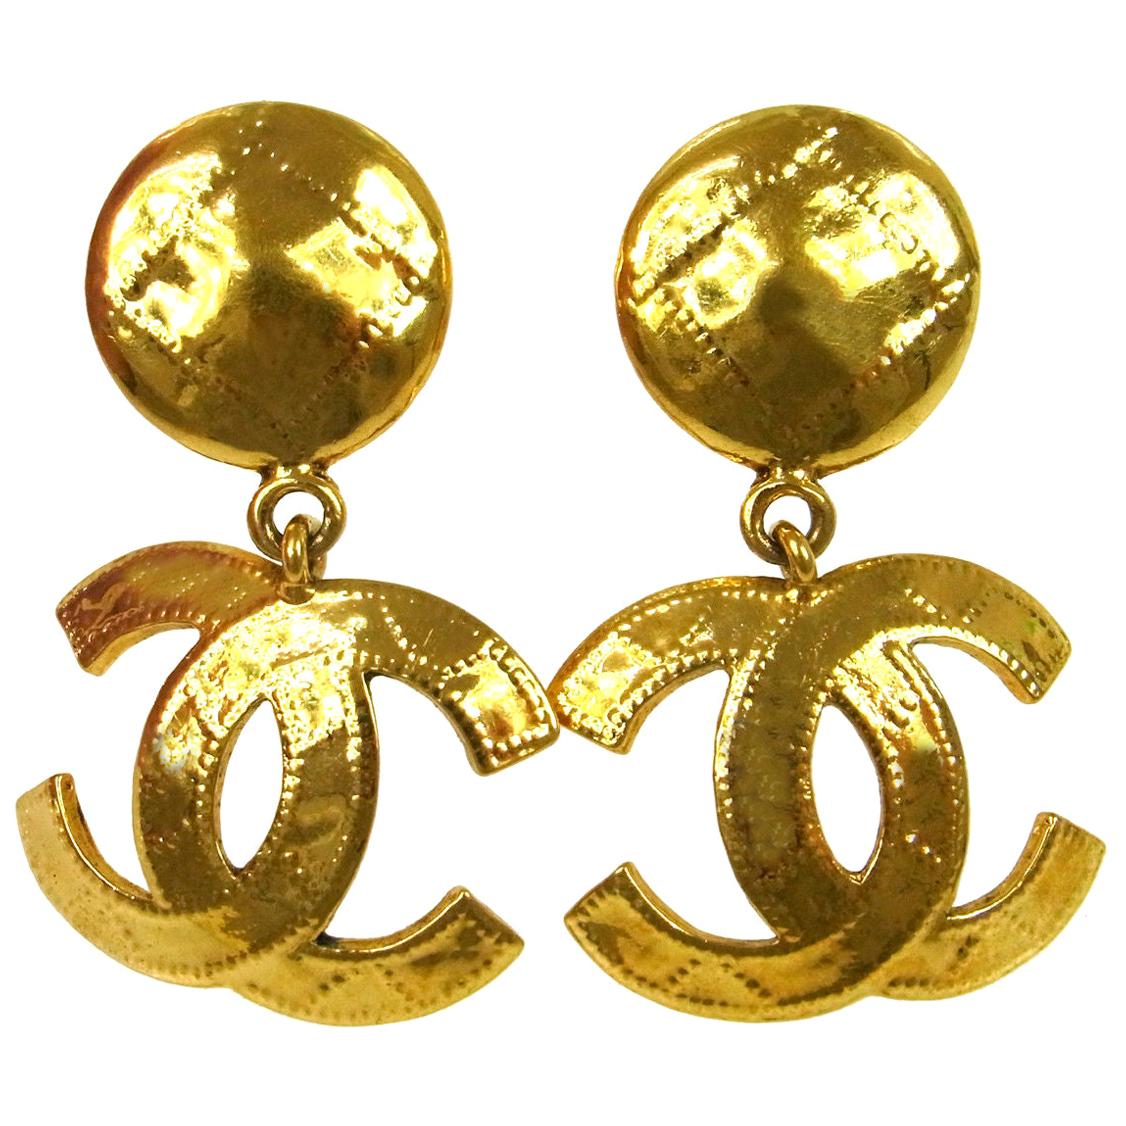 Chanel flower cc earrings - Gem